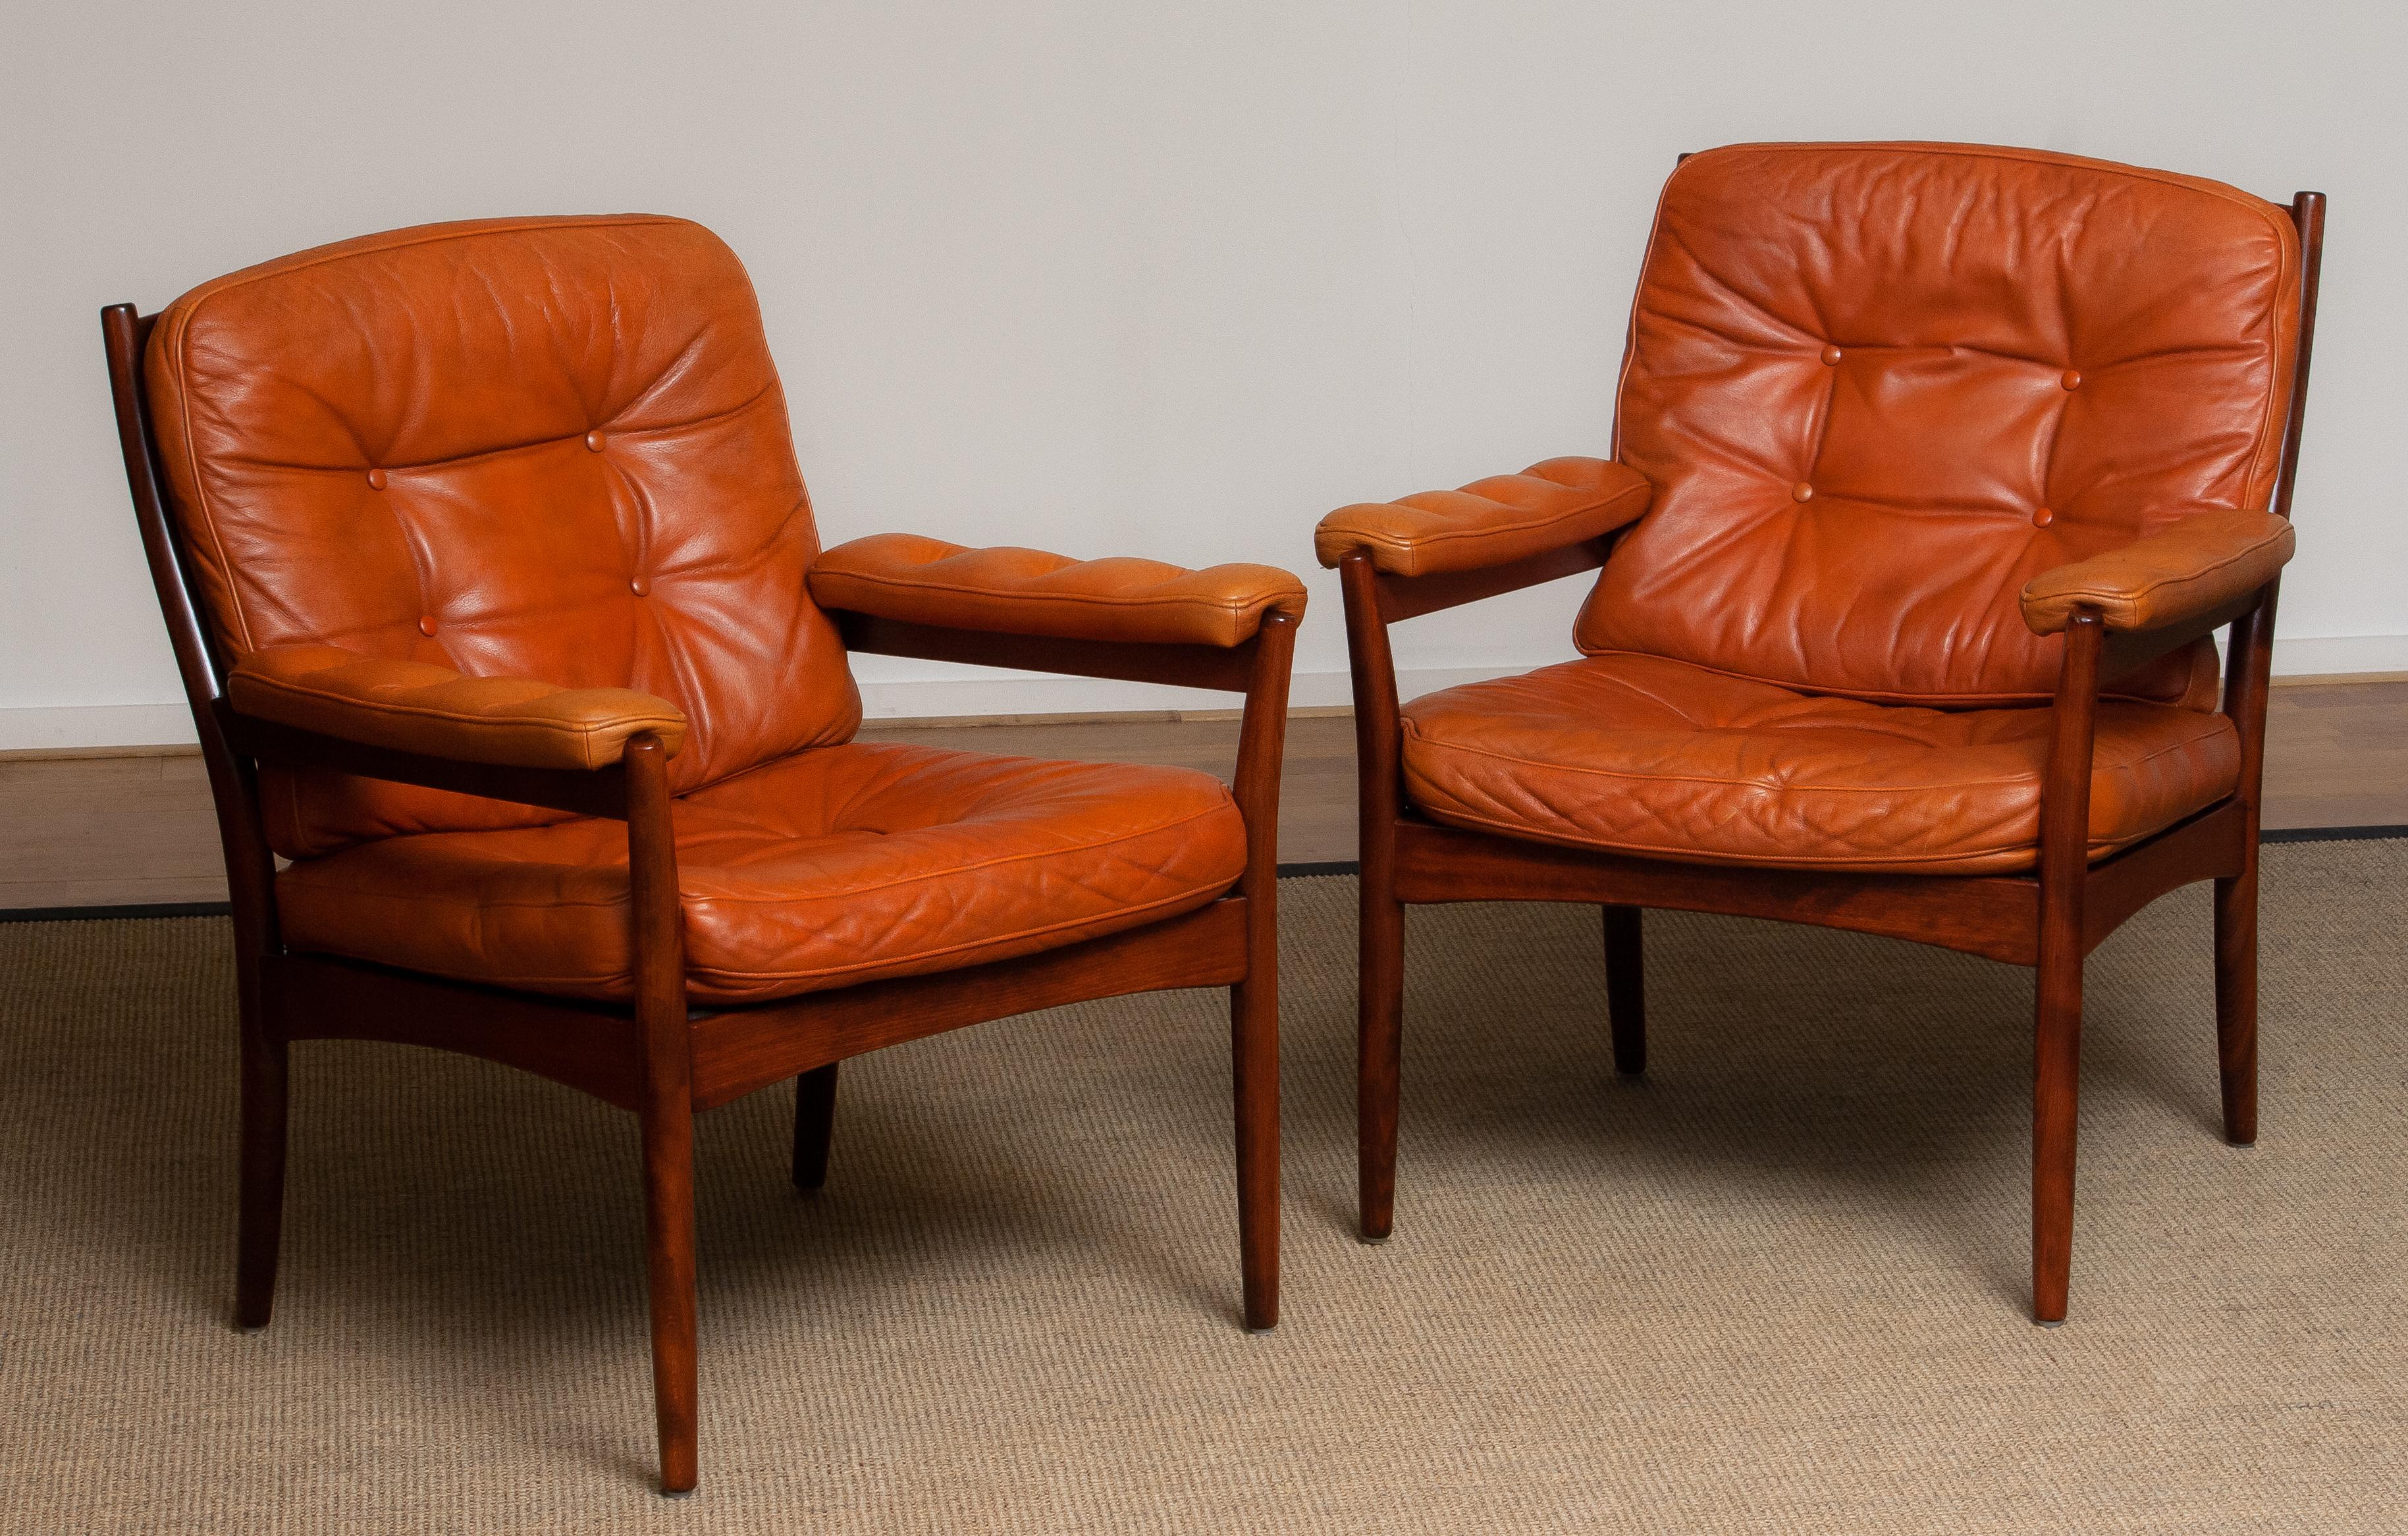 Swedish 1970s Pair of Armchairs in Sturdy Cognac Leather by Göte Möbel Sweden, Carmen